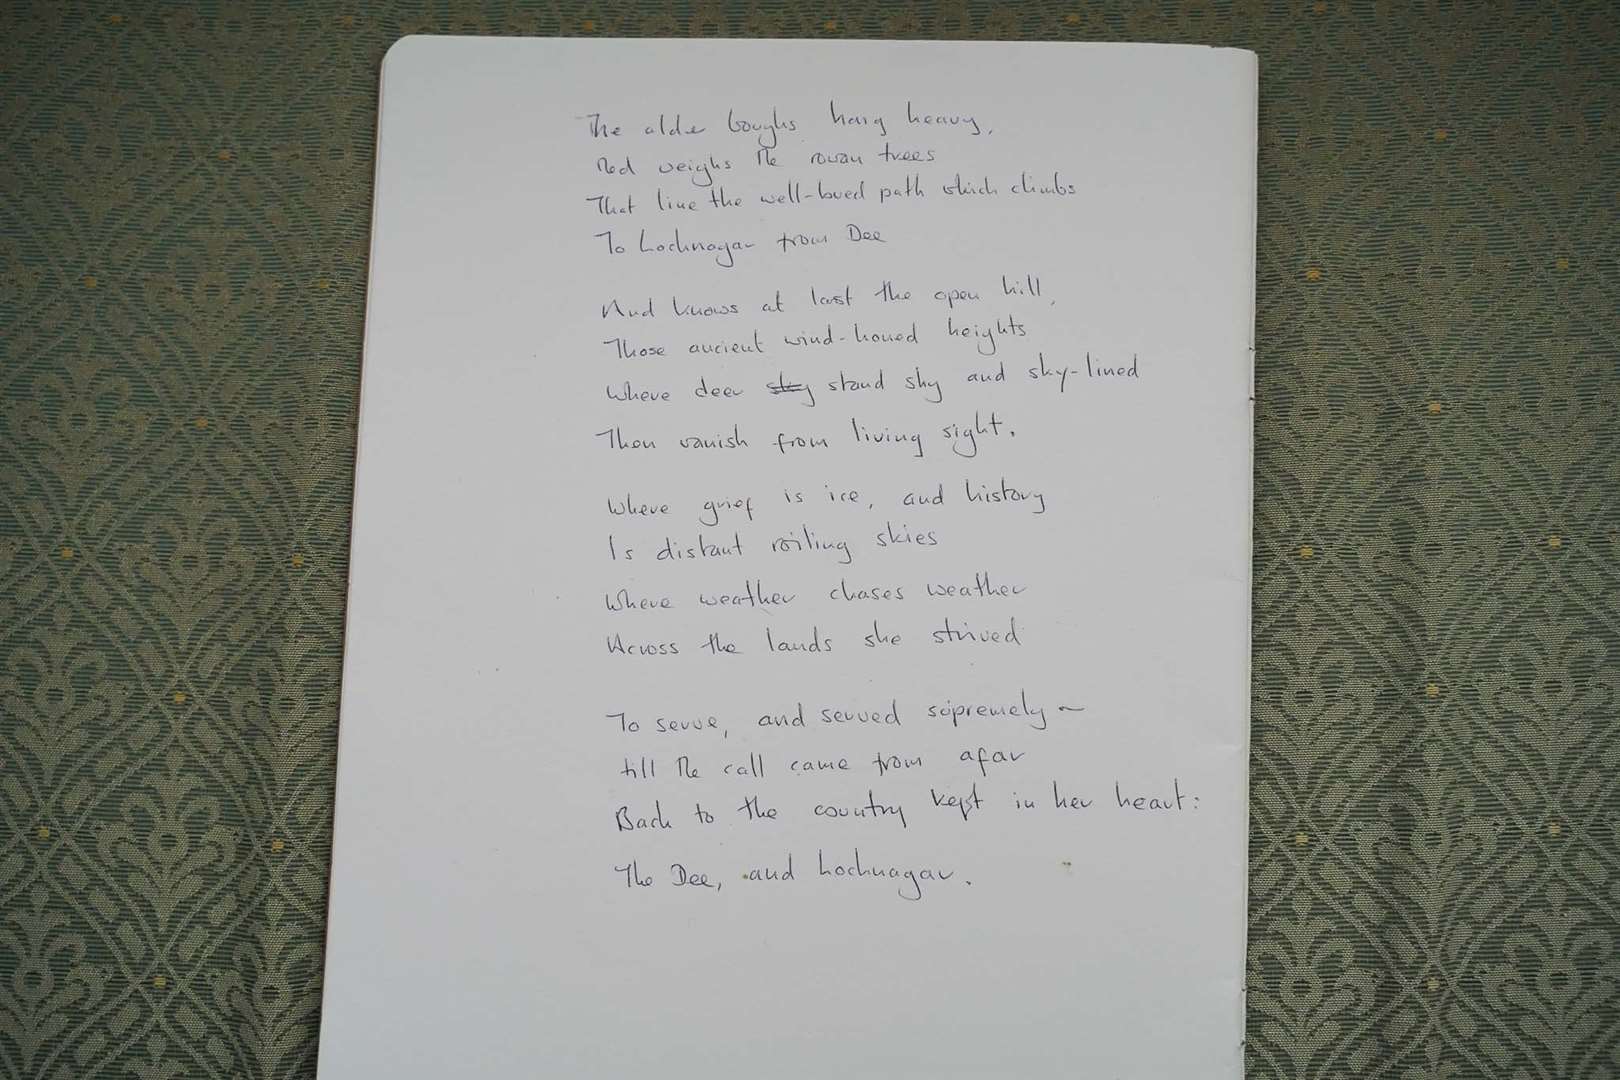 Scottish poet Kathleen Jamie wrote the poem to mark the Queen's passing.